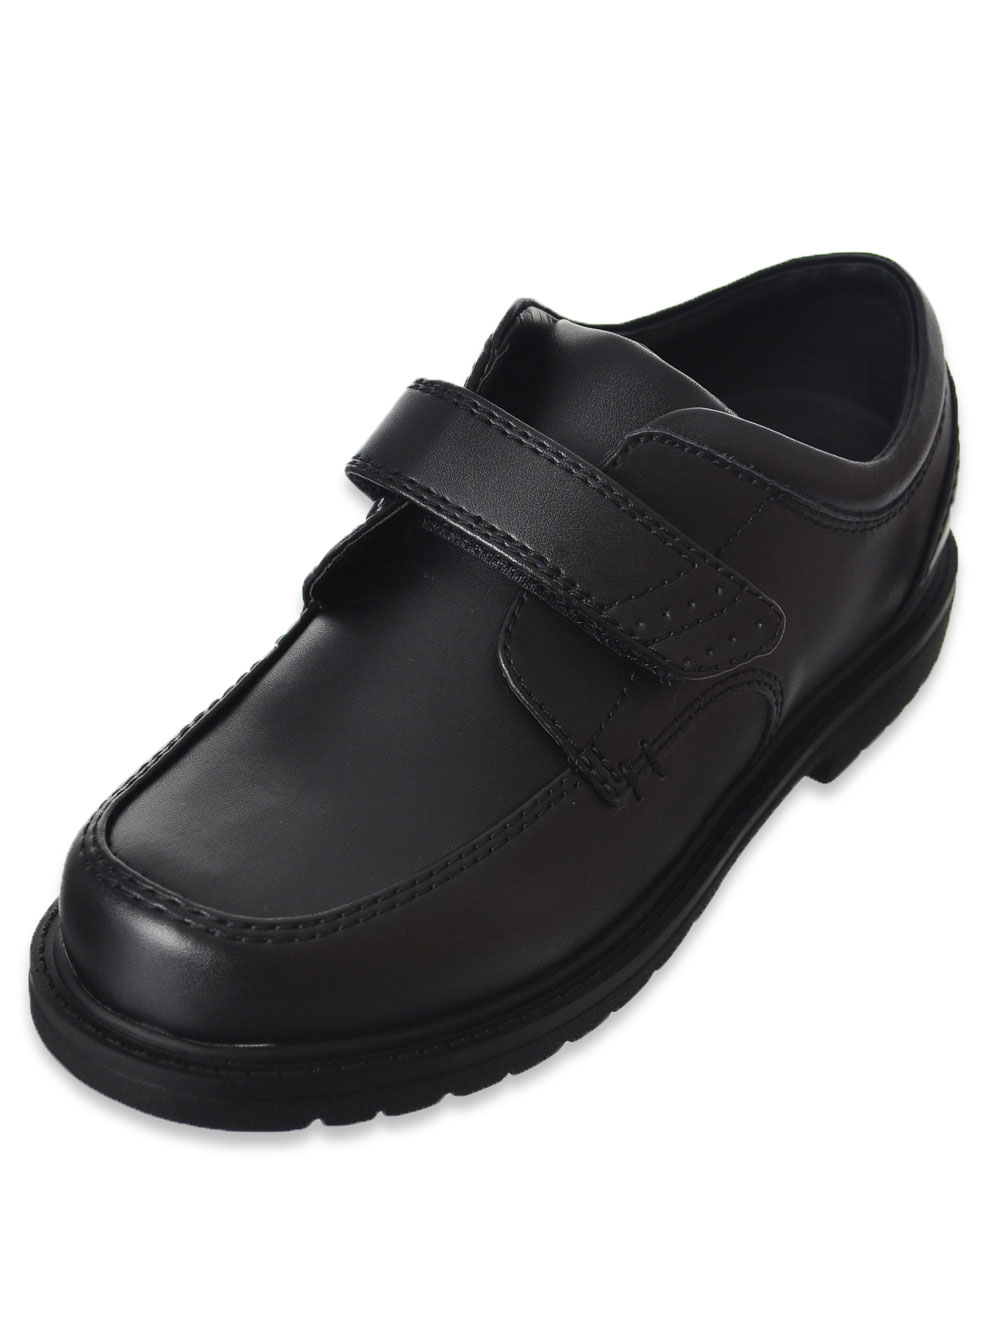 kids black school shoes